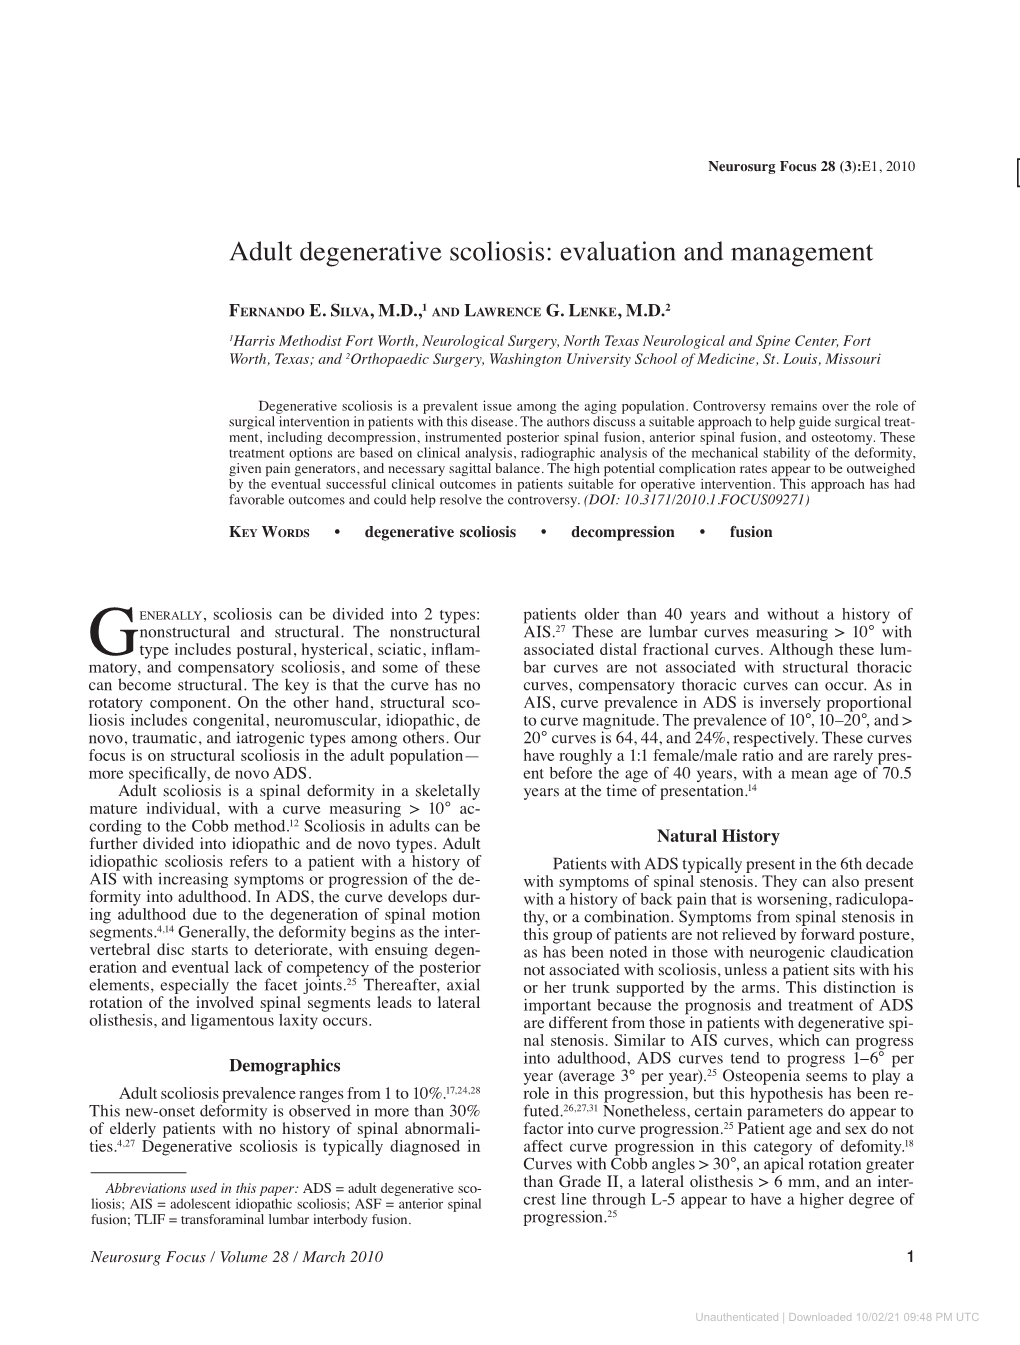 Adult Degenerative Scoliosis: Evaluation and Management